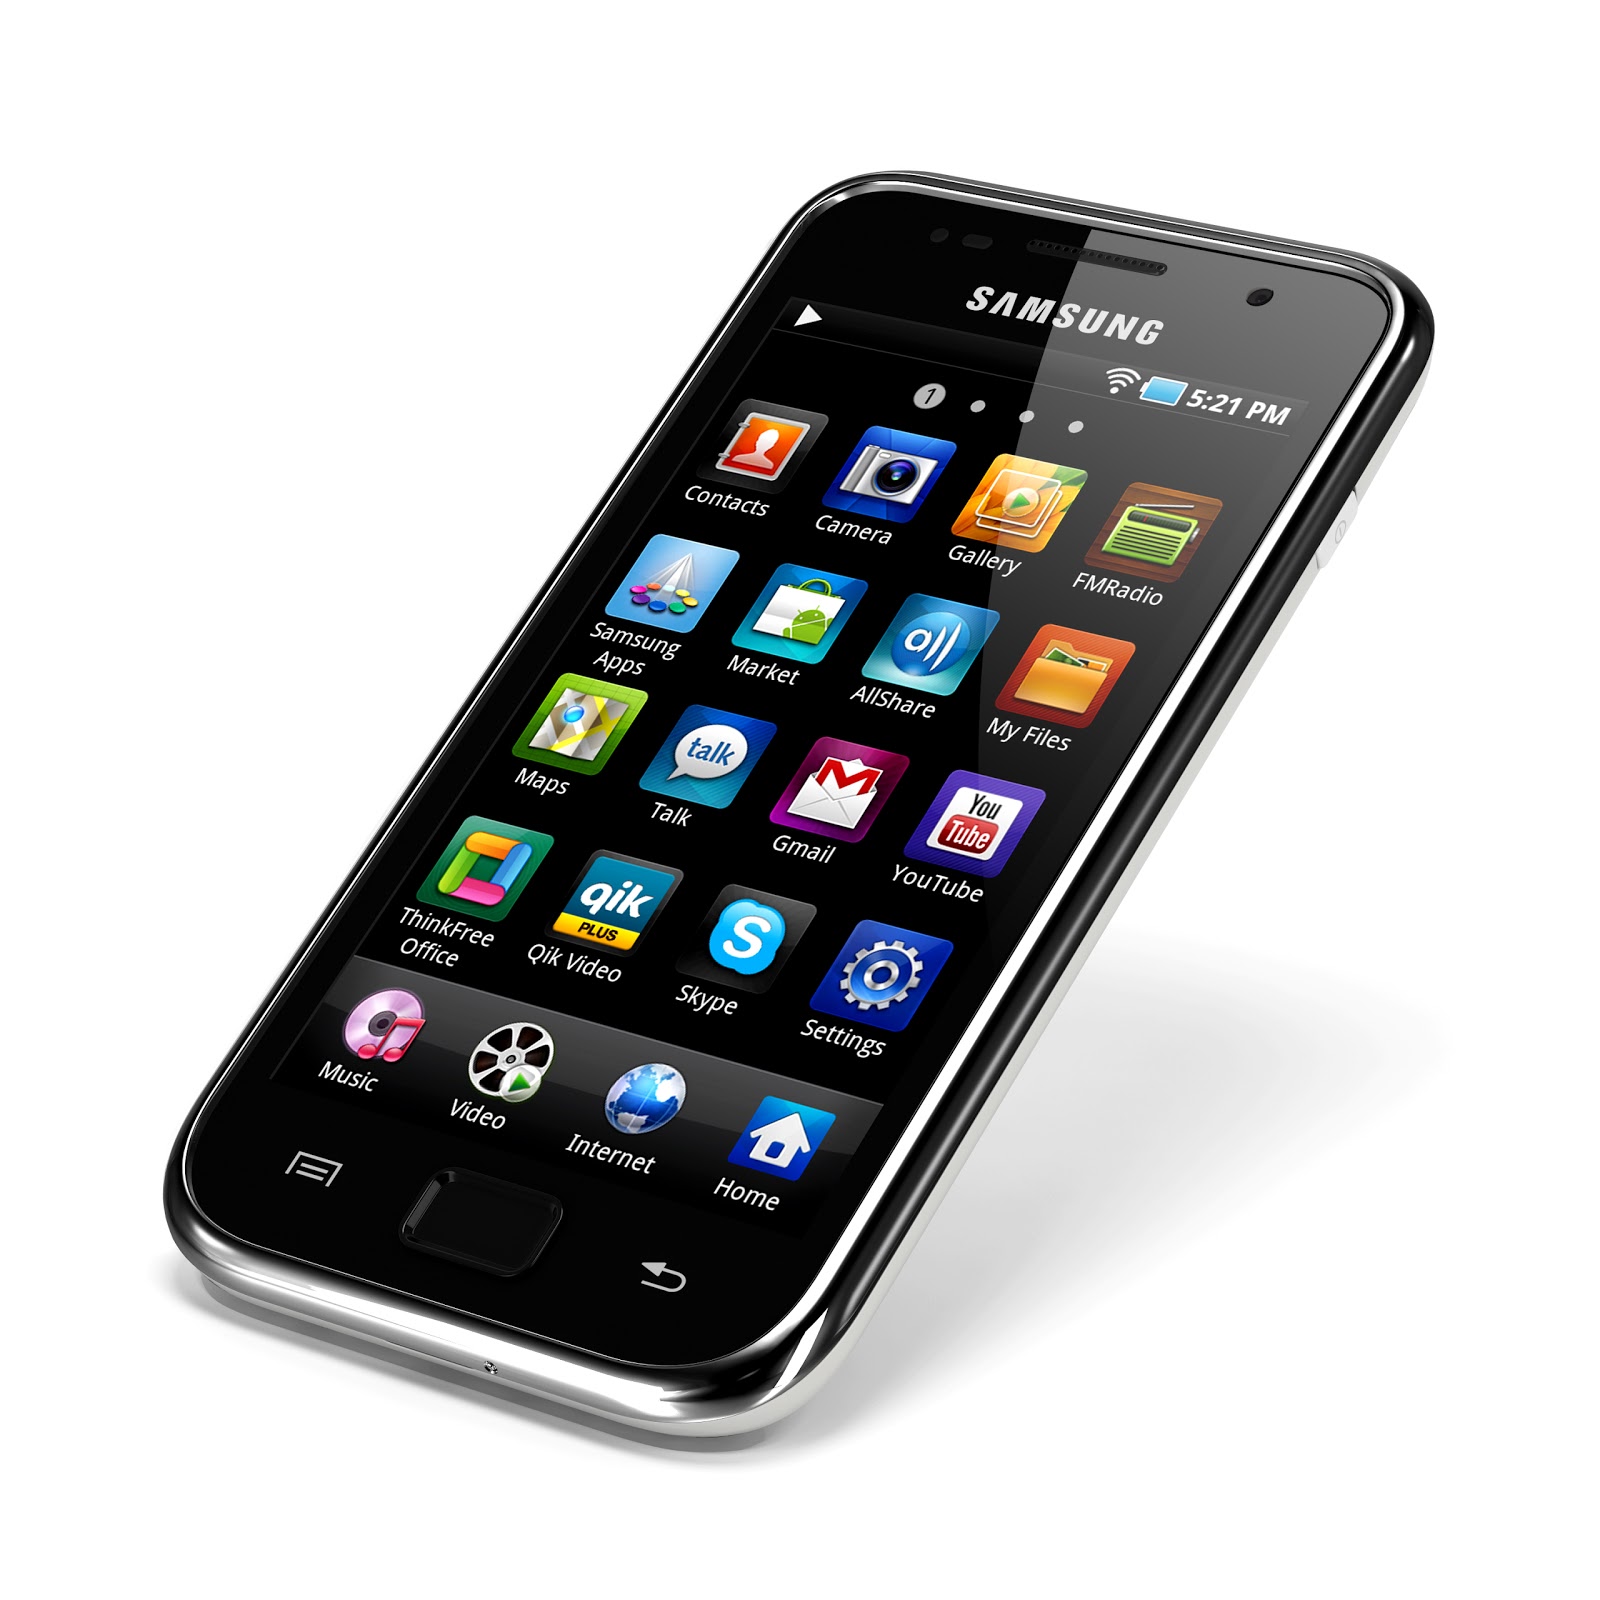 Samsung Galaxy S Wifi 4.0 Is Official ~ NanoGeekTech